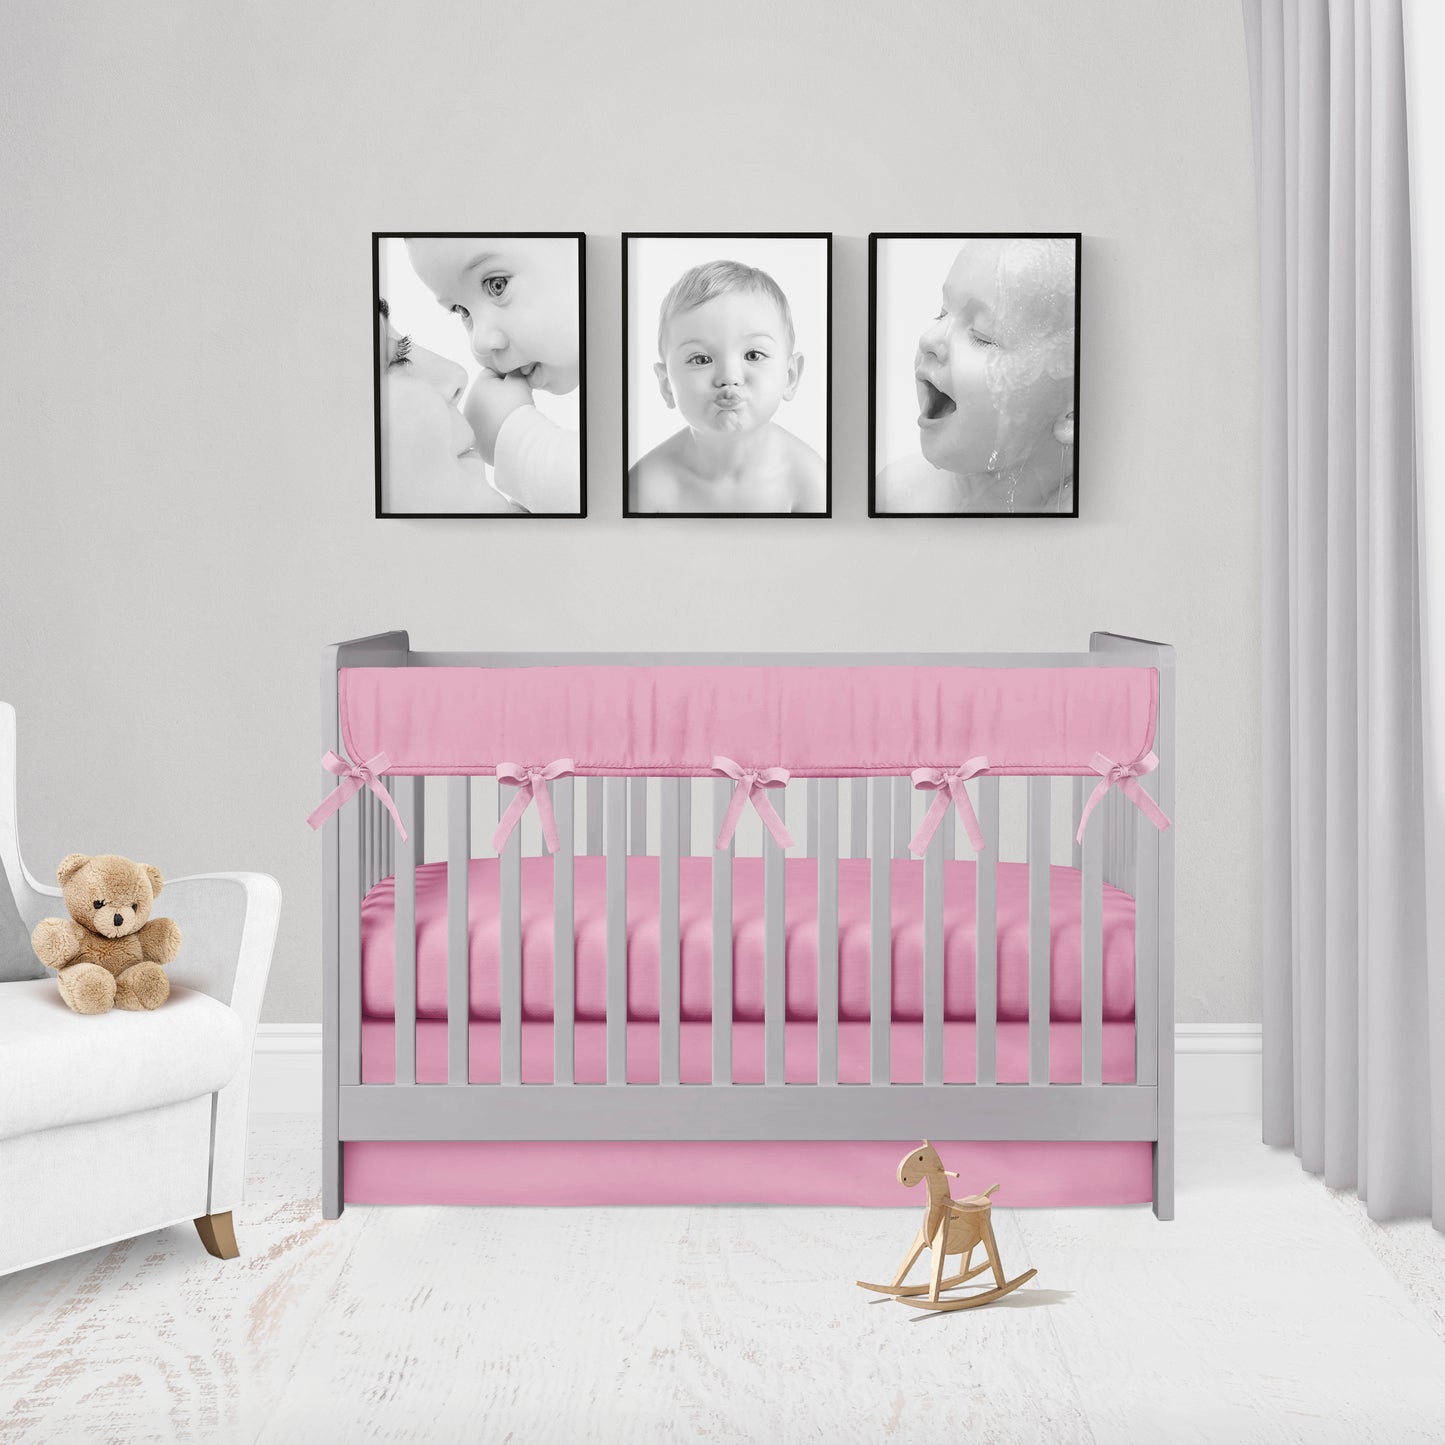 mini crib set shown in pink rail cover, pink crib sheet & pink crib skirt - shown in the flat option